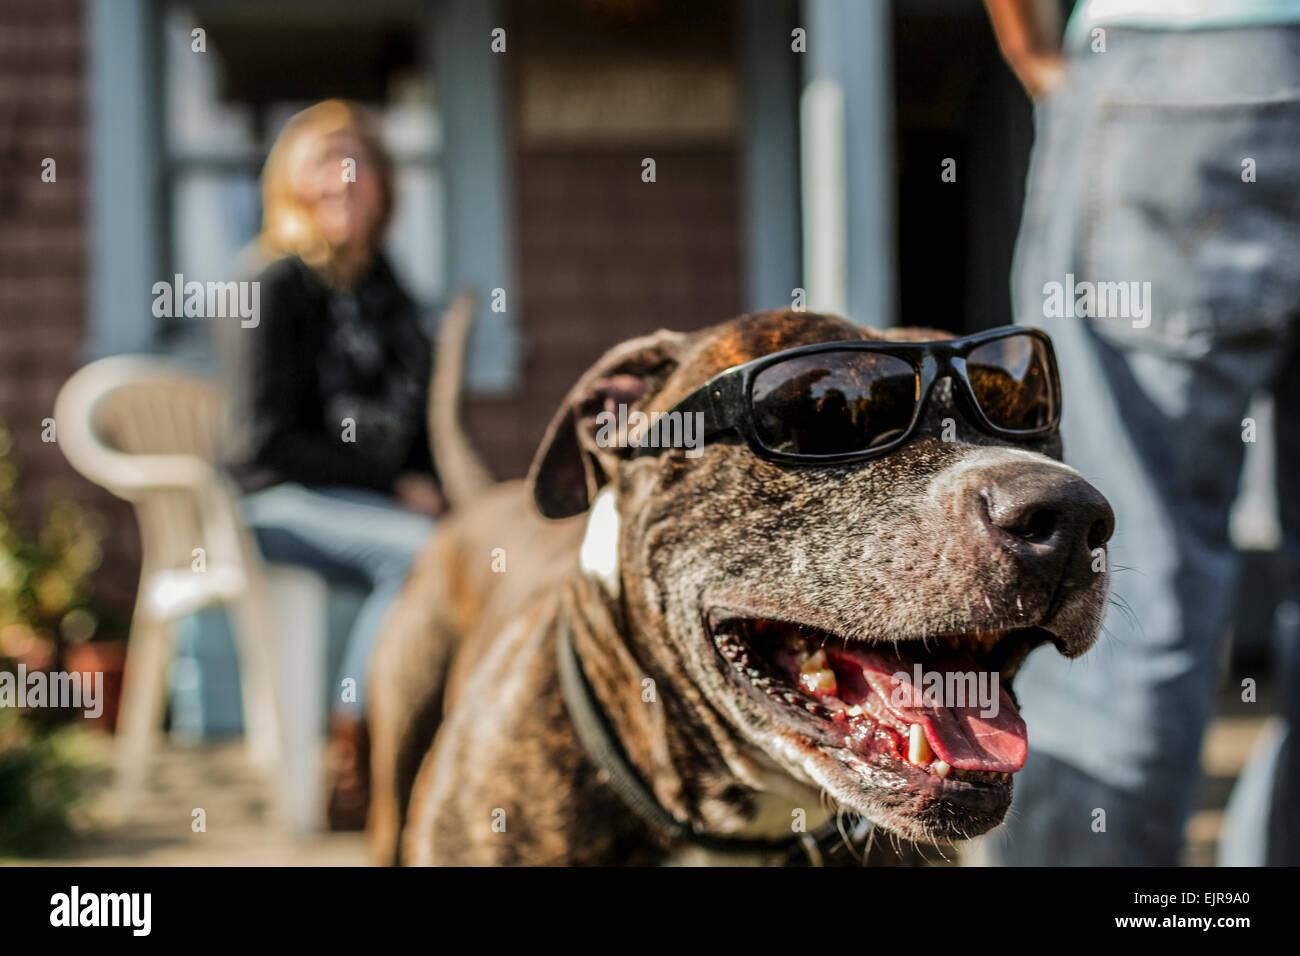 Close up of panting dog wearing sunglasses Stock Photo